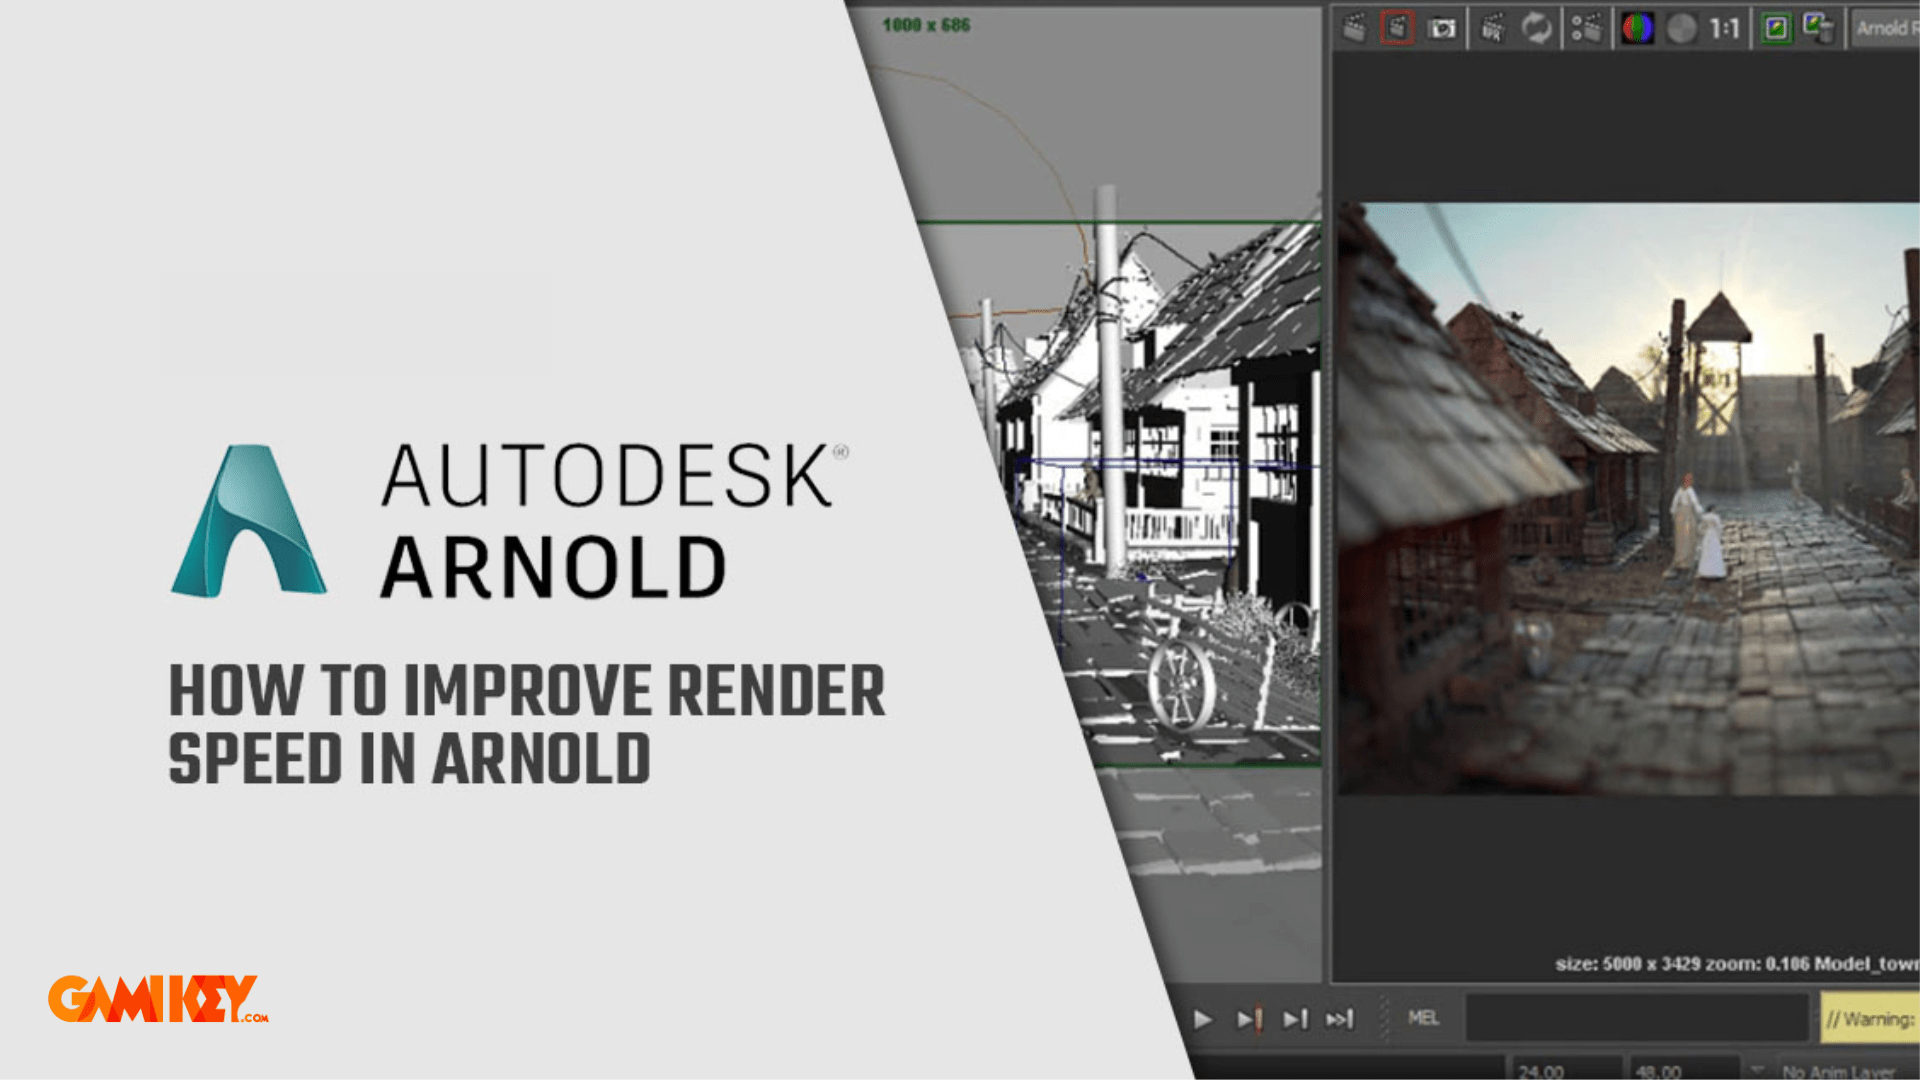 Autodesk Arnold là gì